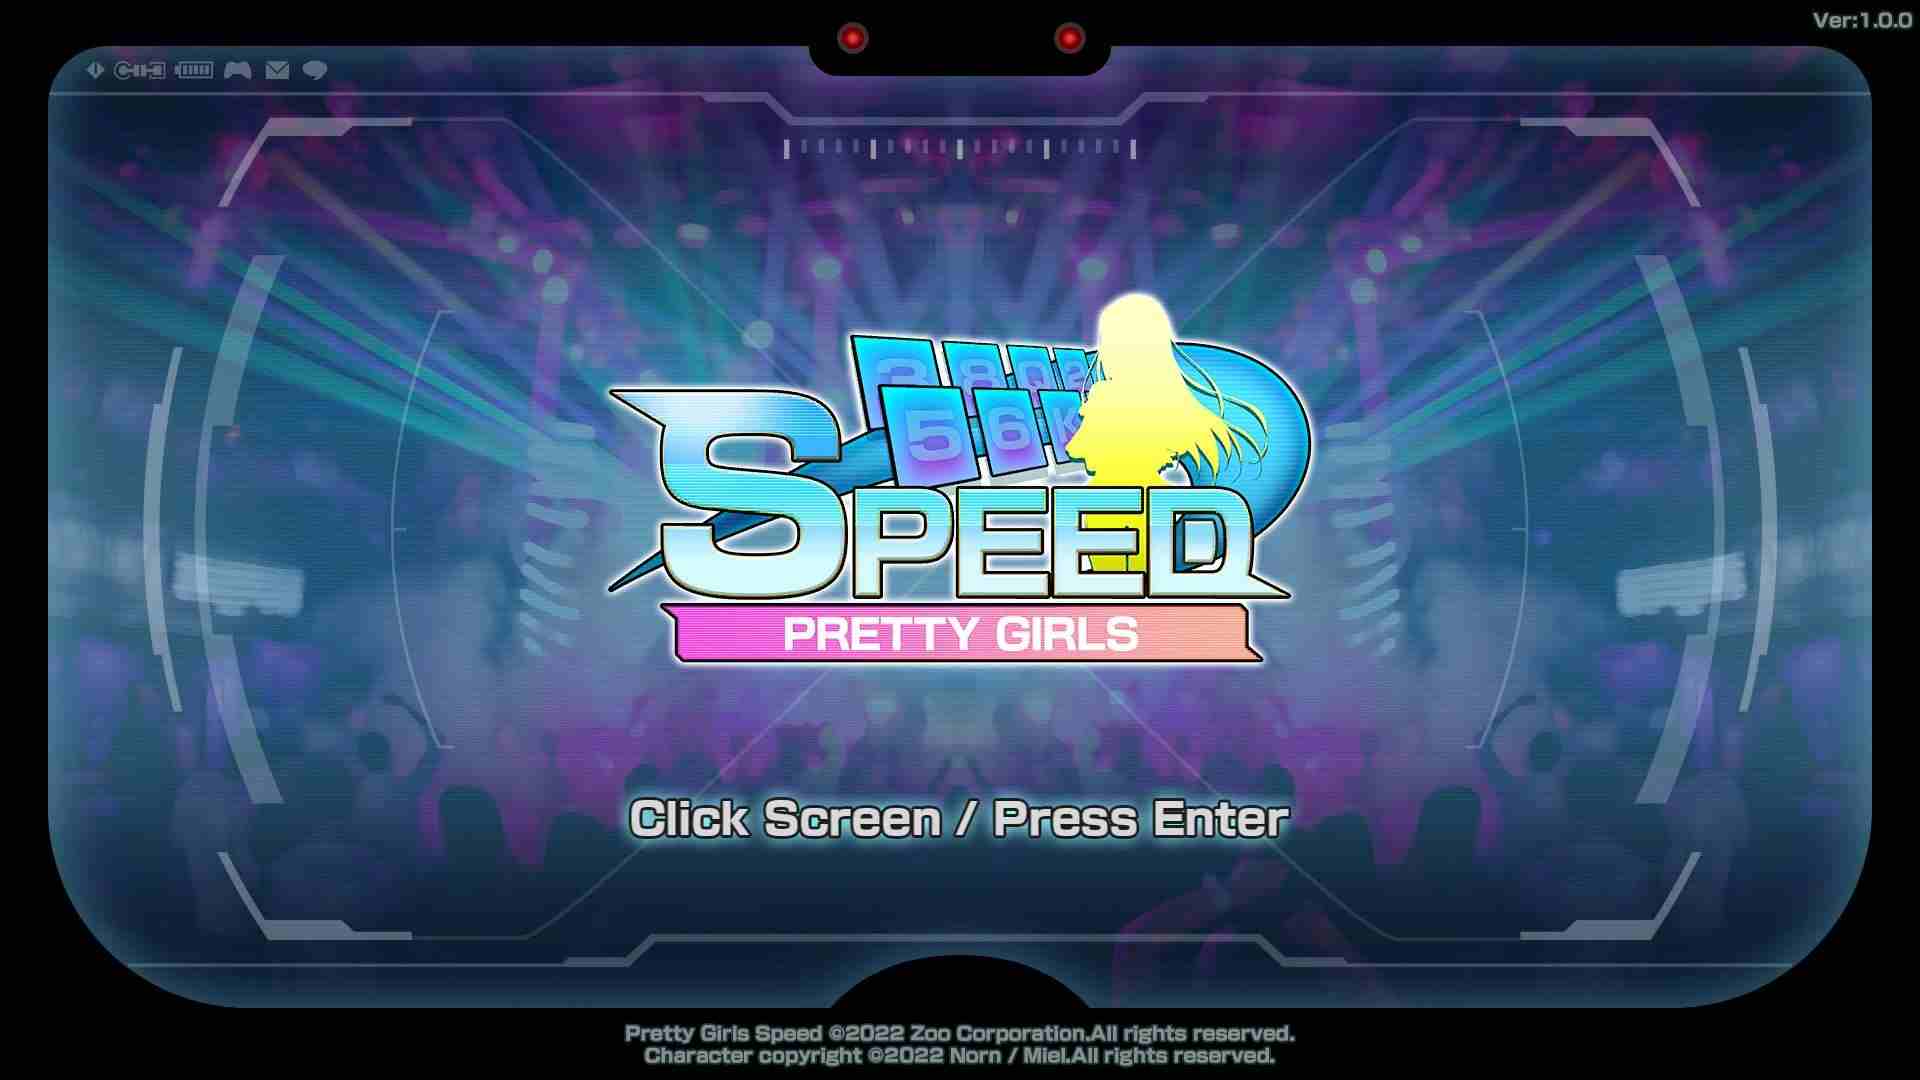 Pretty Girls Speed | Sem tempo pra conversa, irmão